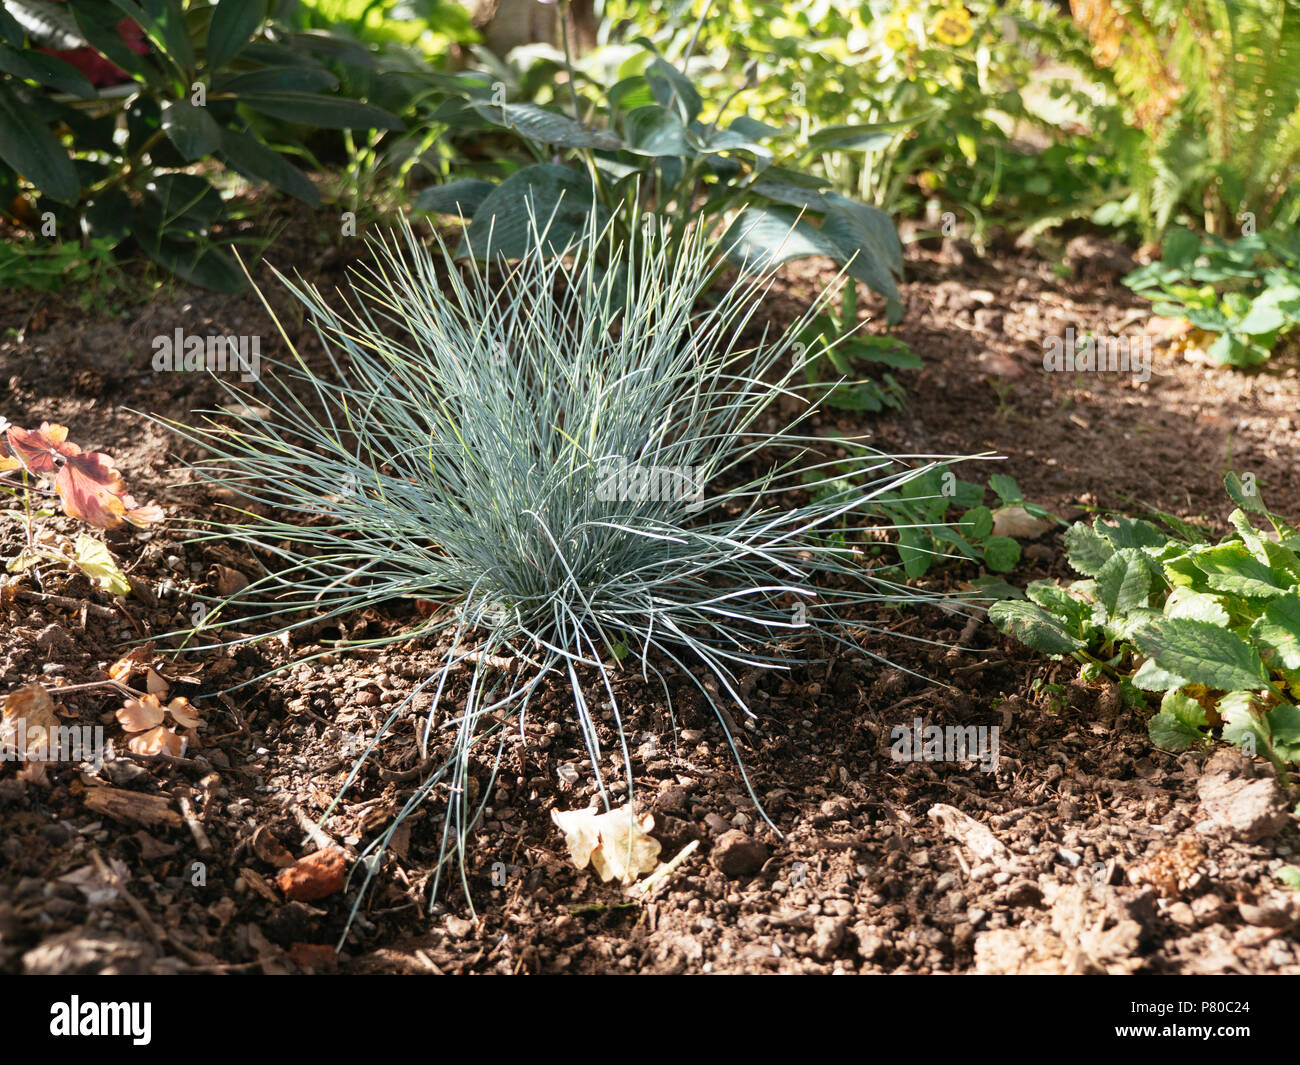 Festuca glauca plant in a border of a garden Stock Photo